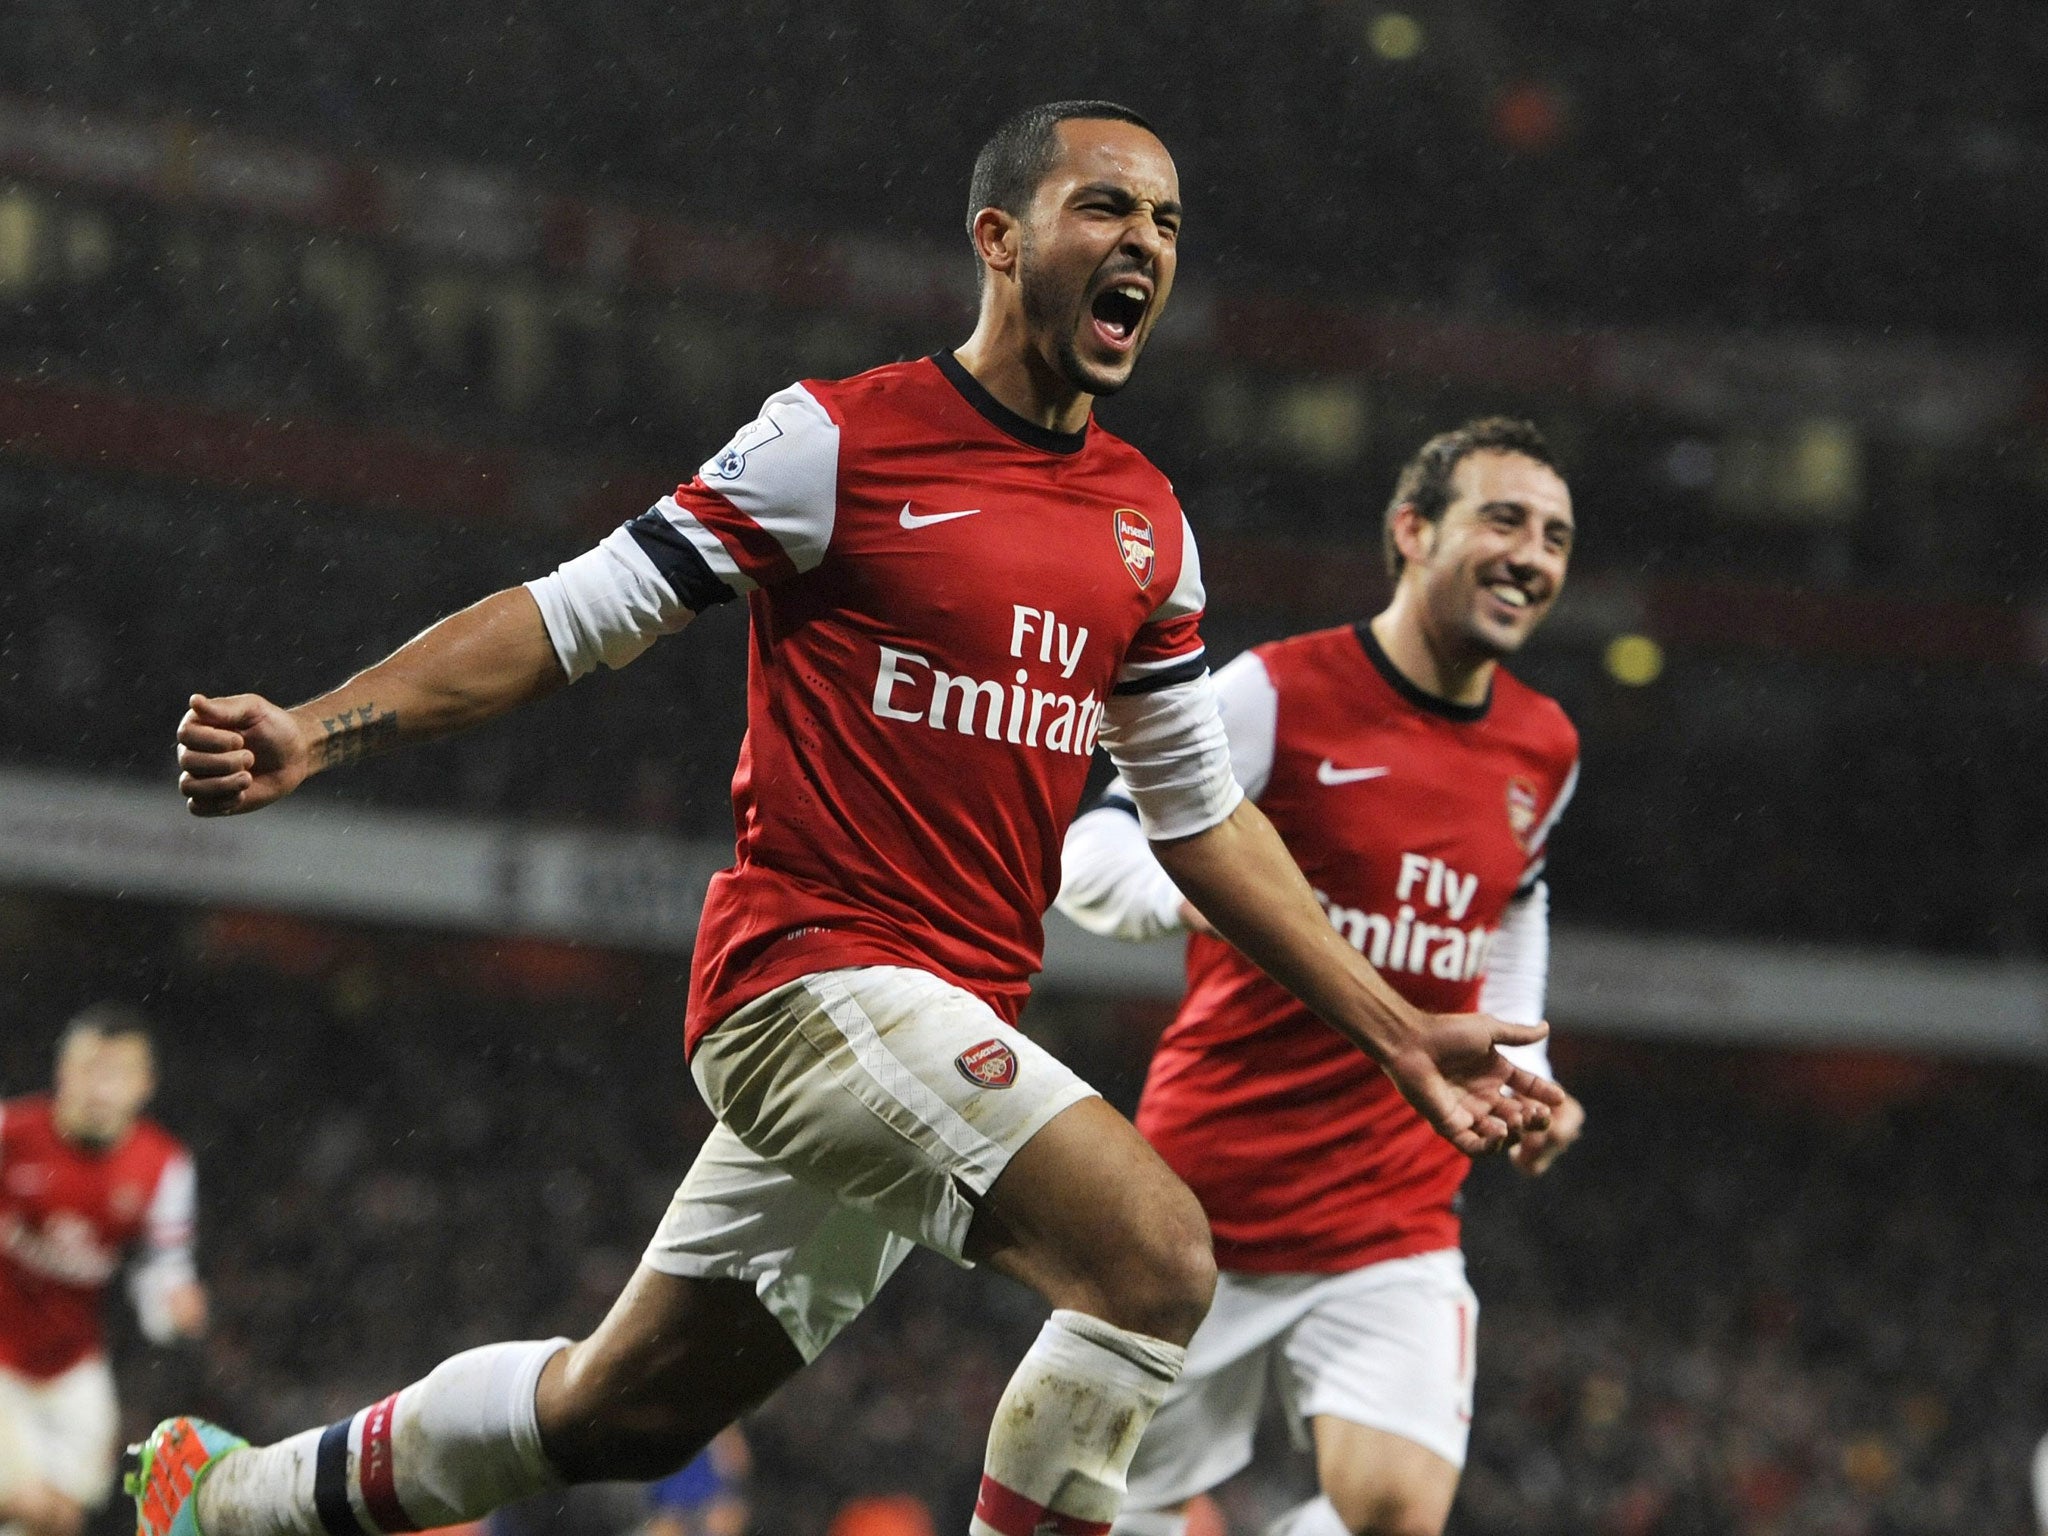 Arsenal's Theo Walcott celebrates his goal against Cardiff